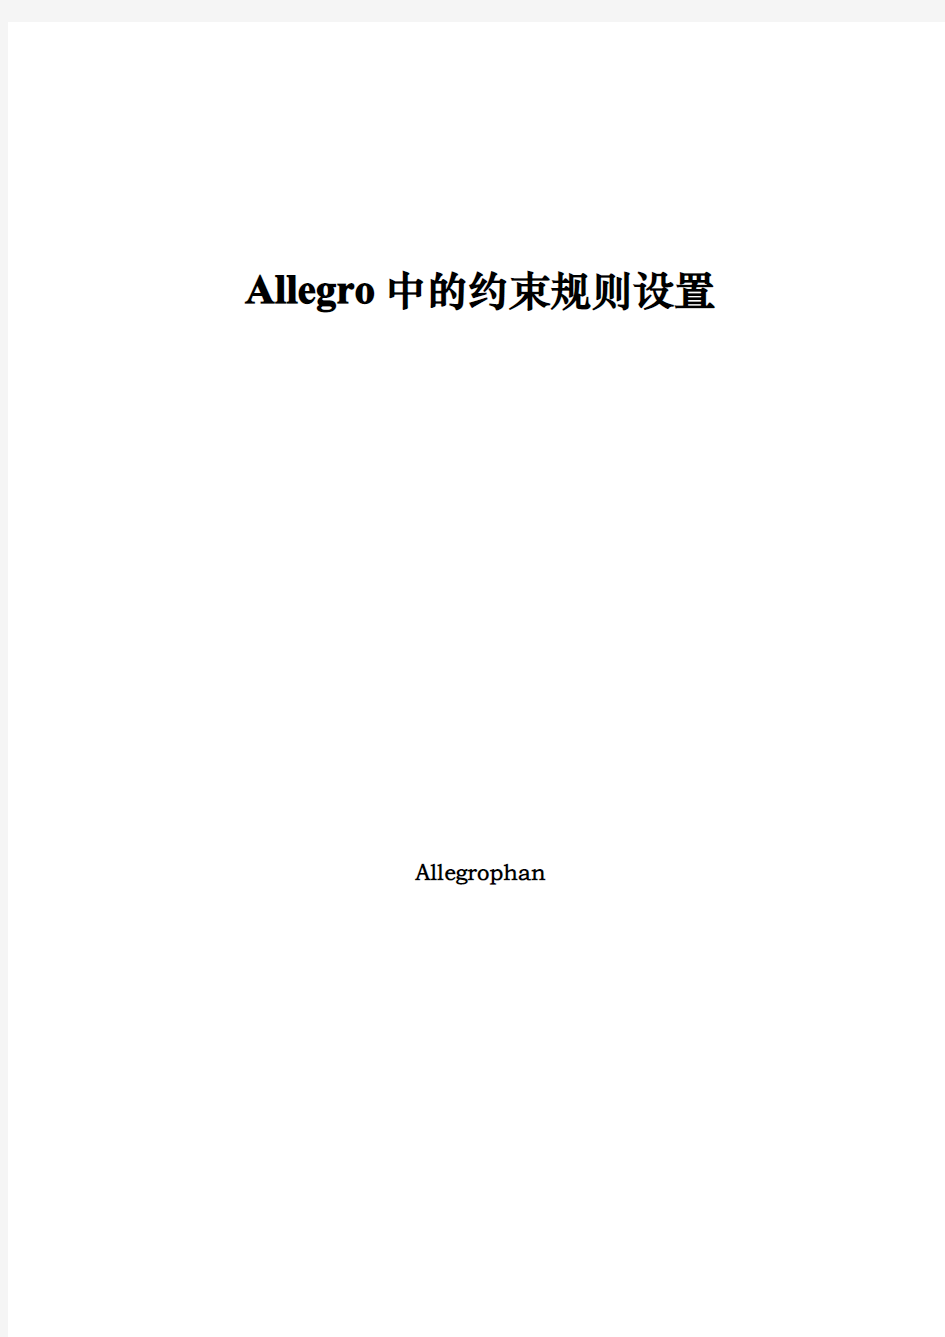 Allegro中的约束规则设置1.1